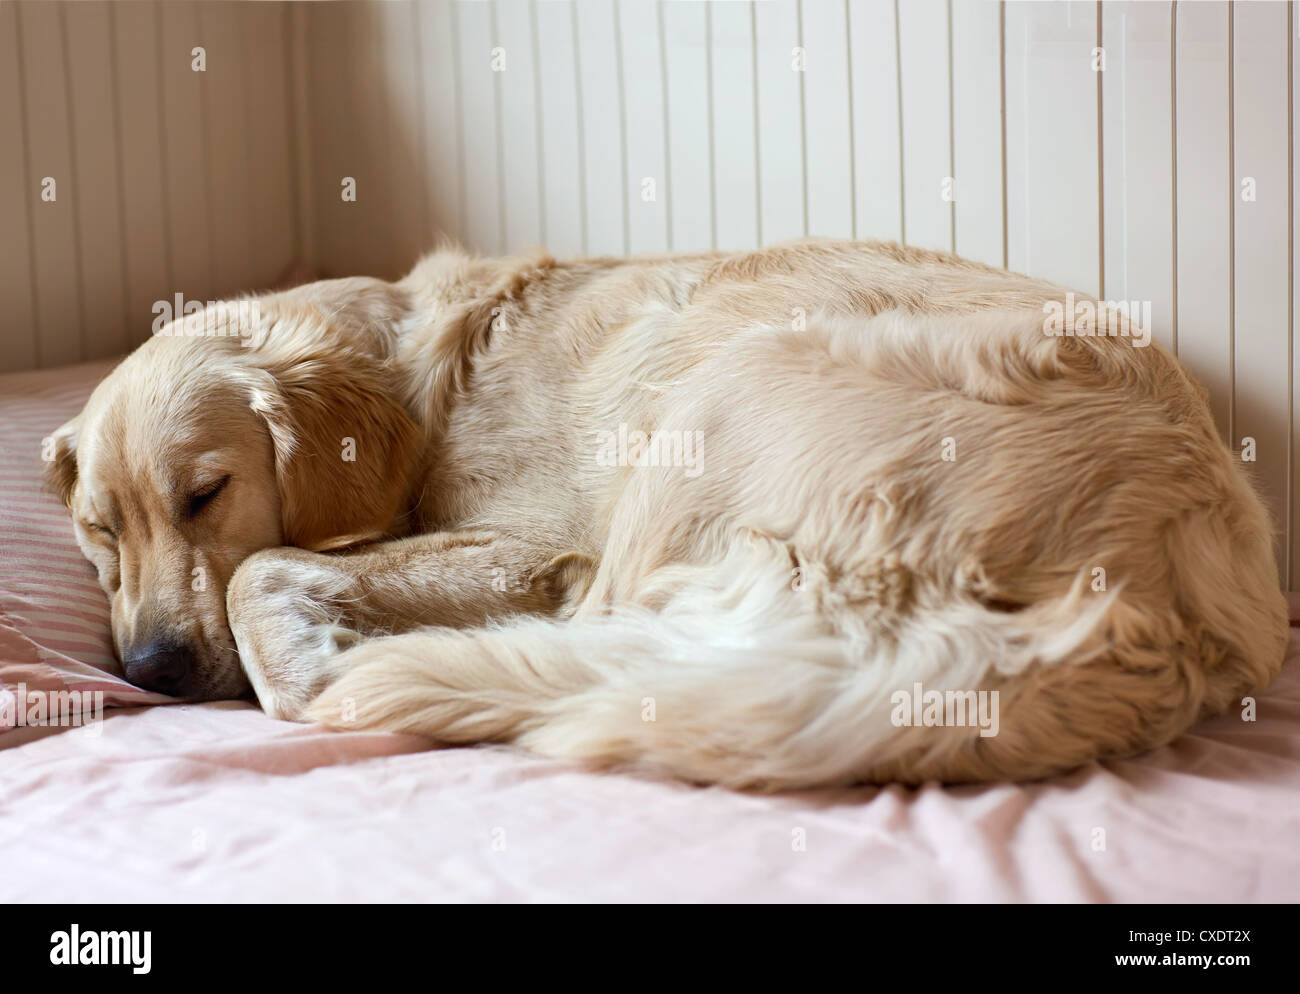 Dog sleeping on the bed - golden retriever Stock Photo